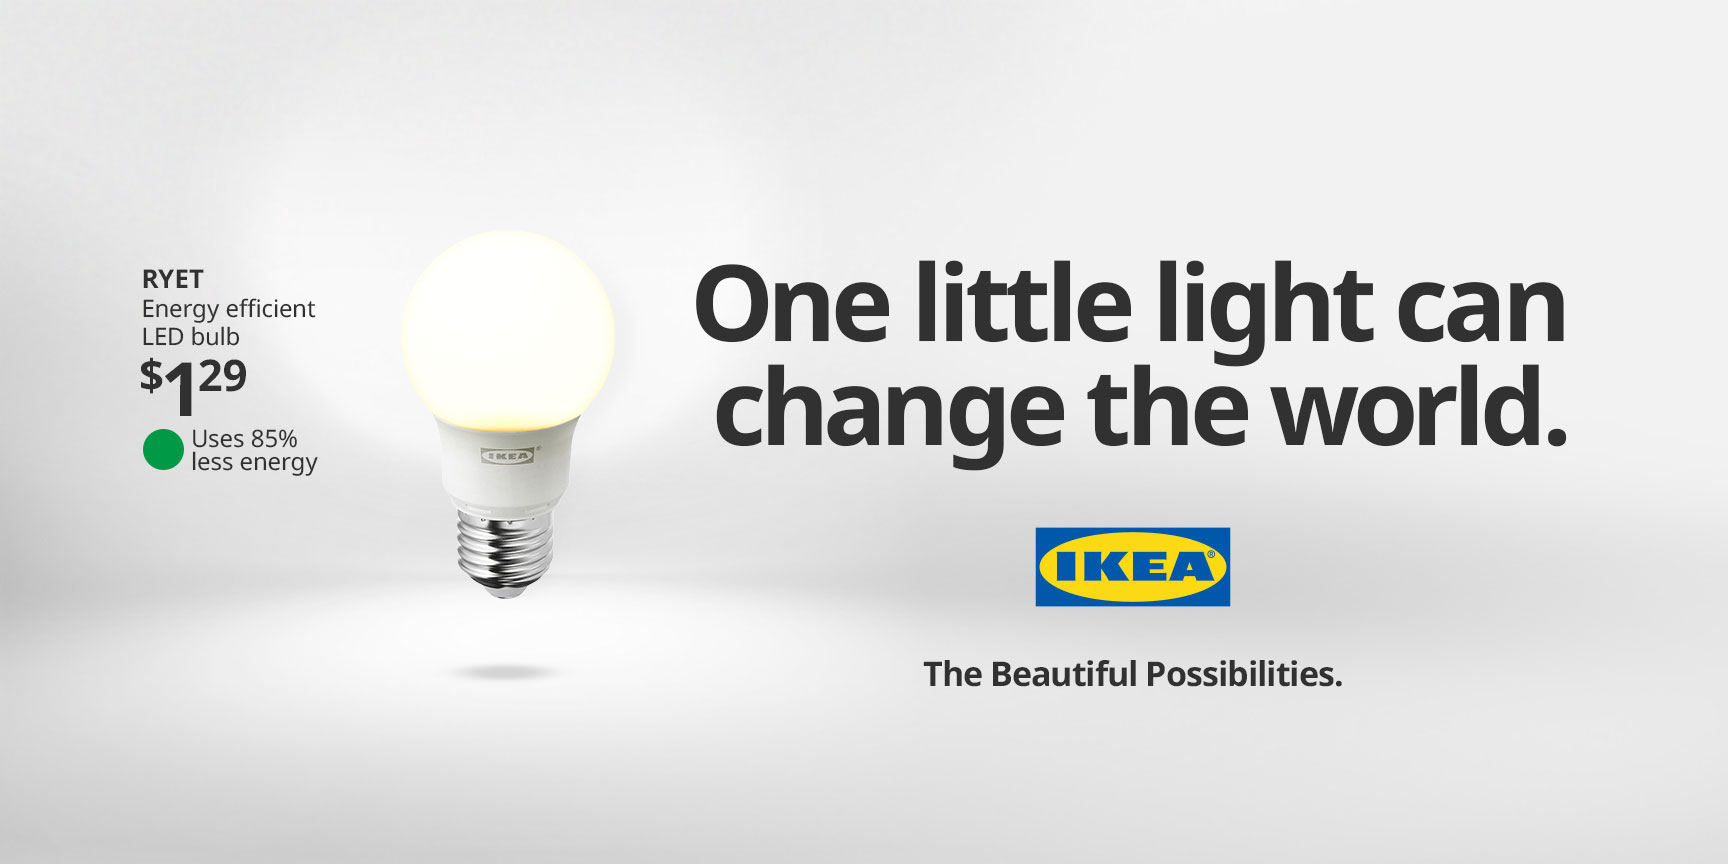 Energy efficient LED lightbulb ad from IKEA